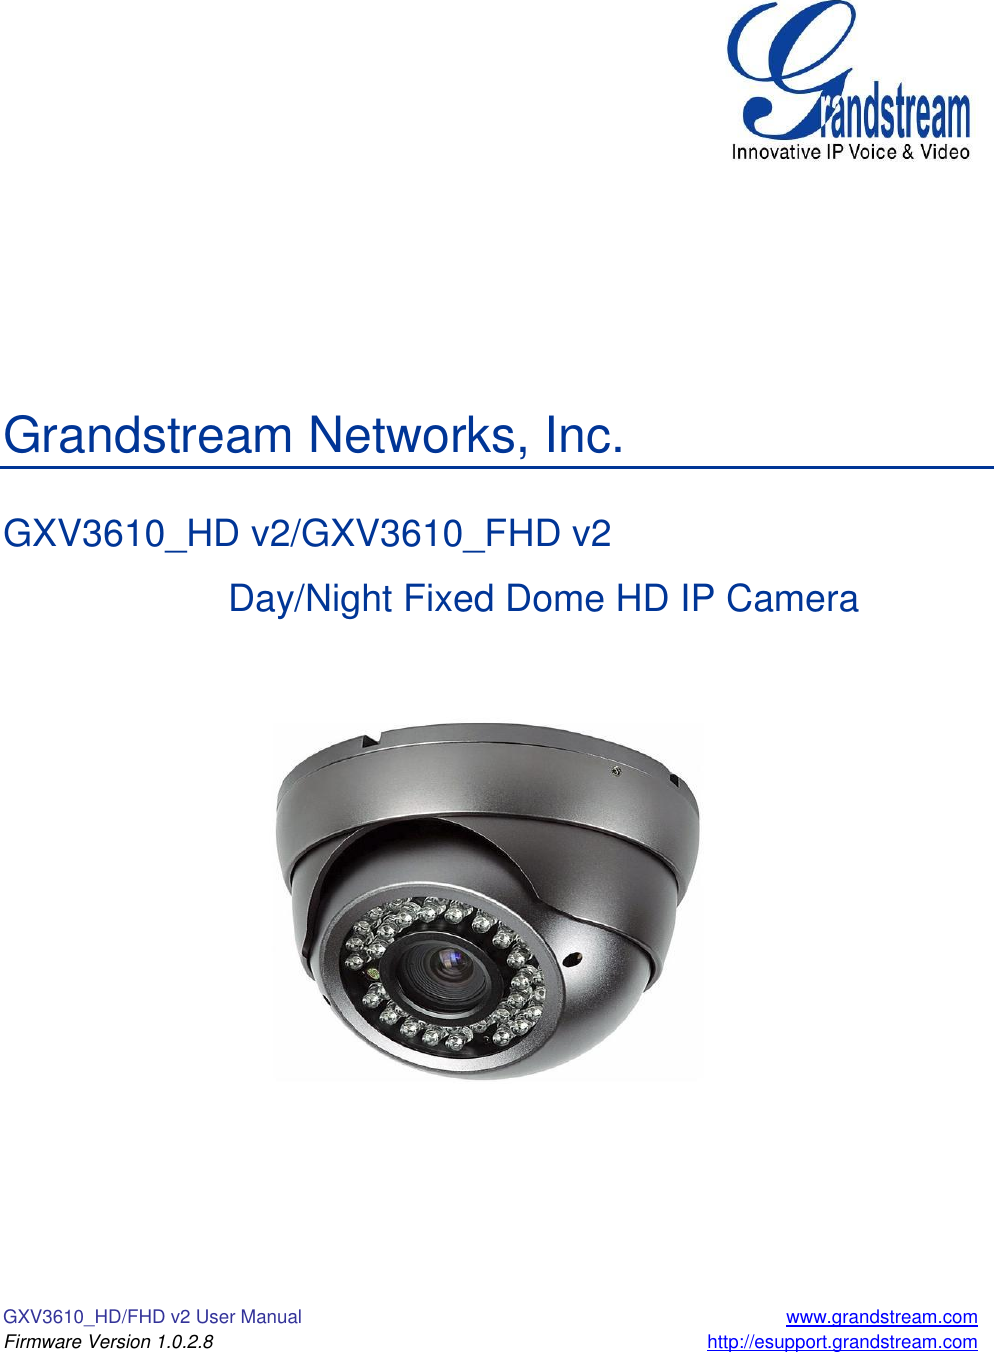 GXV3610_HD/FHD v2 User Manual  www.grandstream.com Firmware Version 1.0.2.8 http://esupport.grandstream.com             Grandstream Networks, Inc.  GXV3610_HD v2/GXV3610_FHD v2        Day/Night Fixed Dome HD IP Camera        